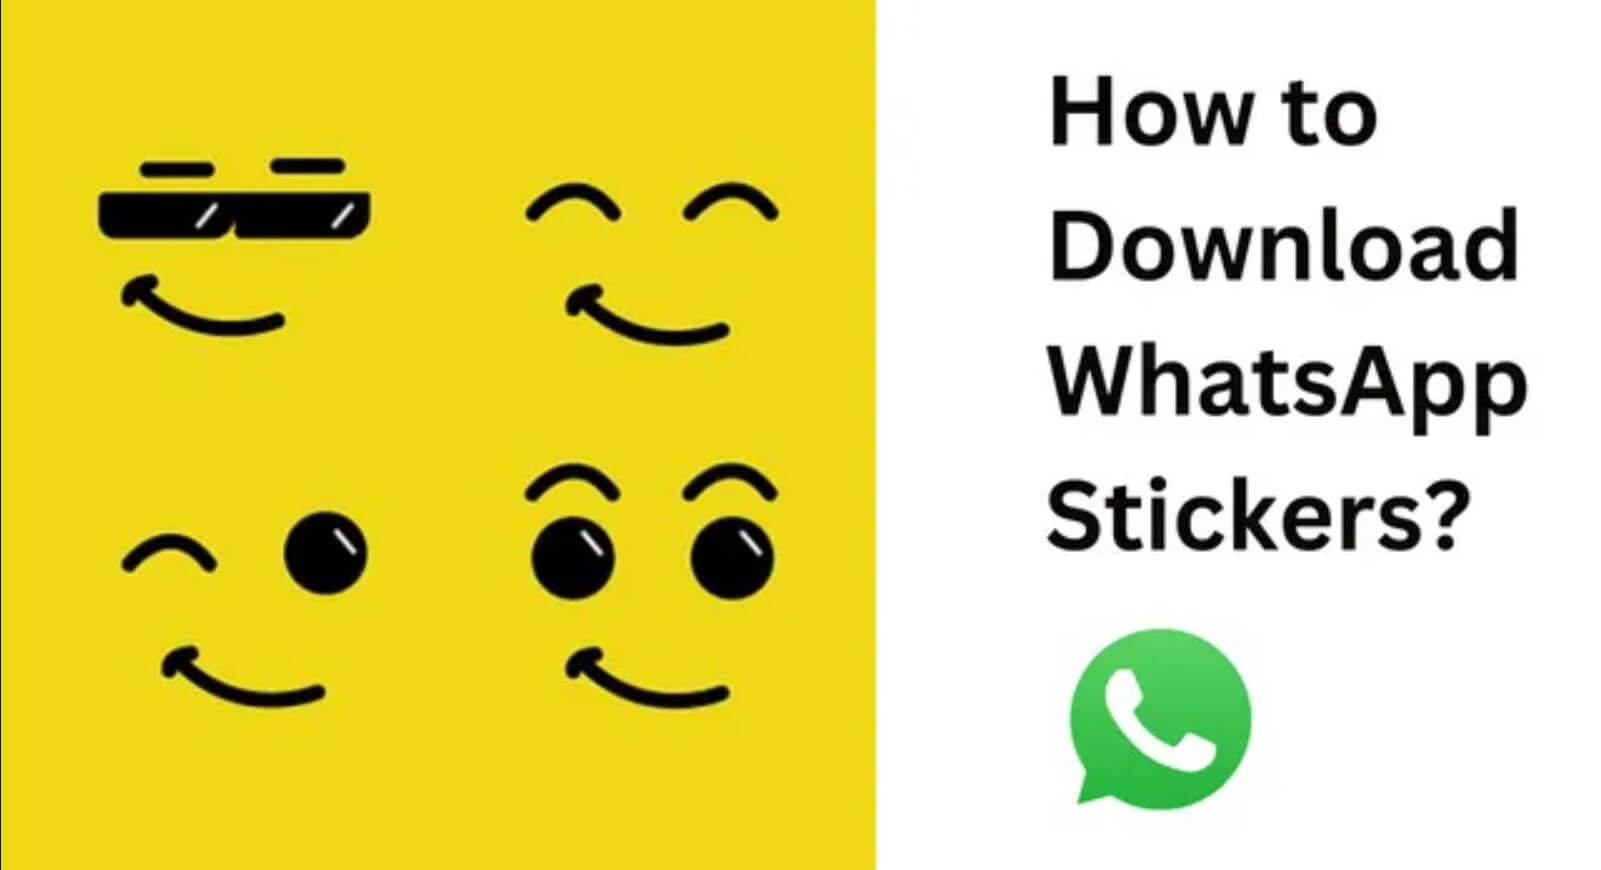 How To Create Whatsapp Stickers - GIF Sticker Packs In Whatsapp